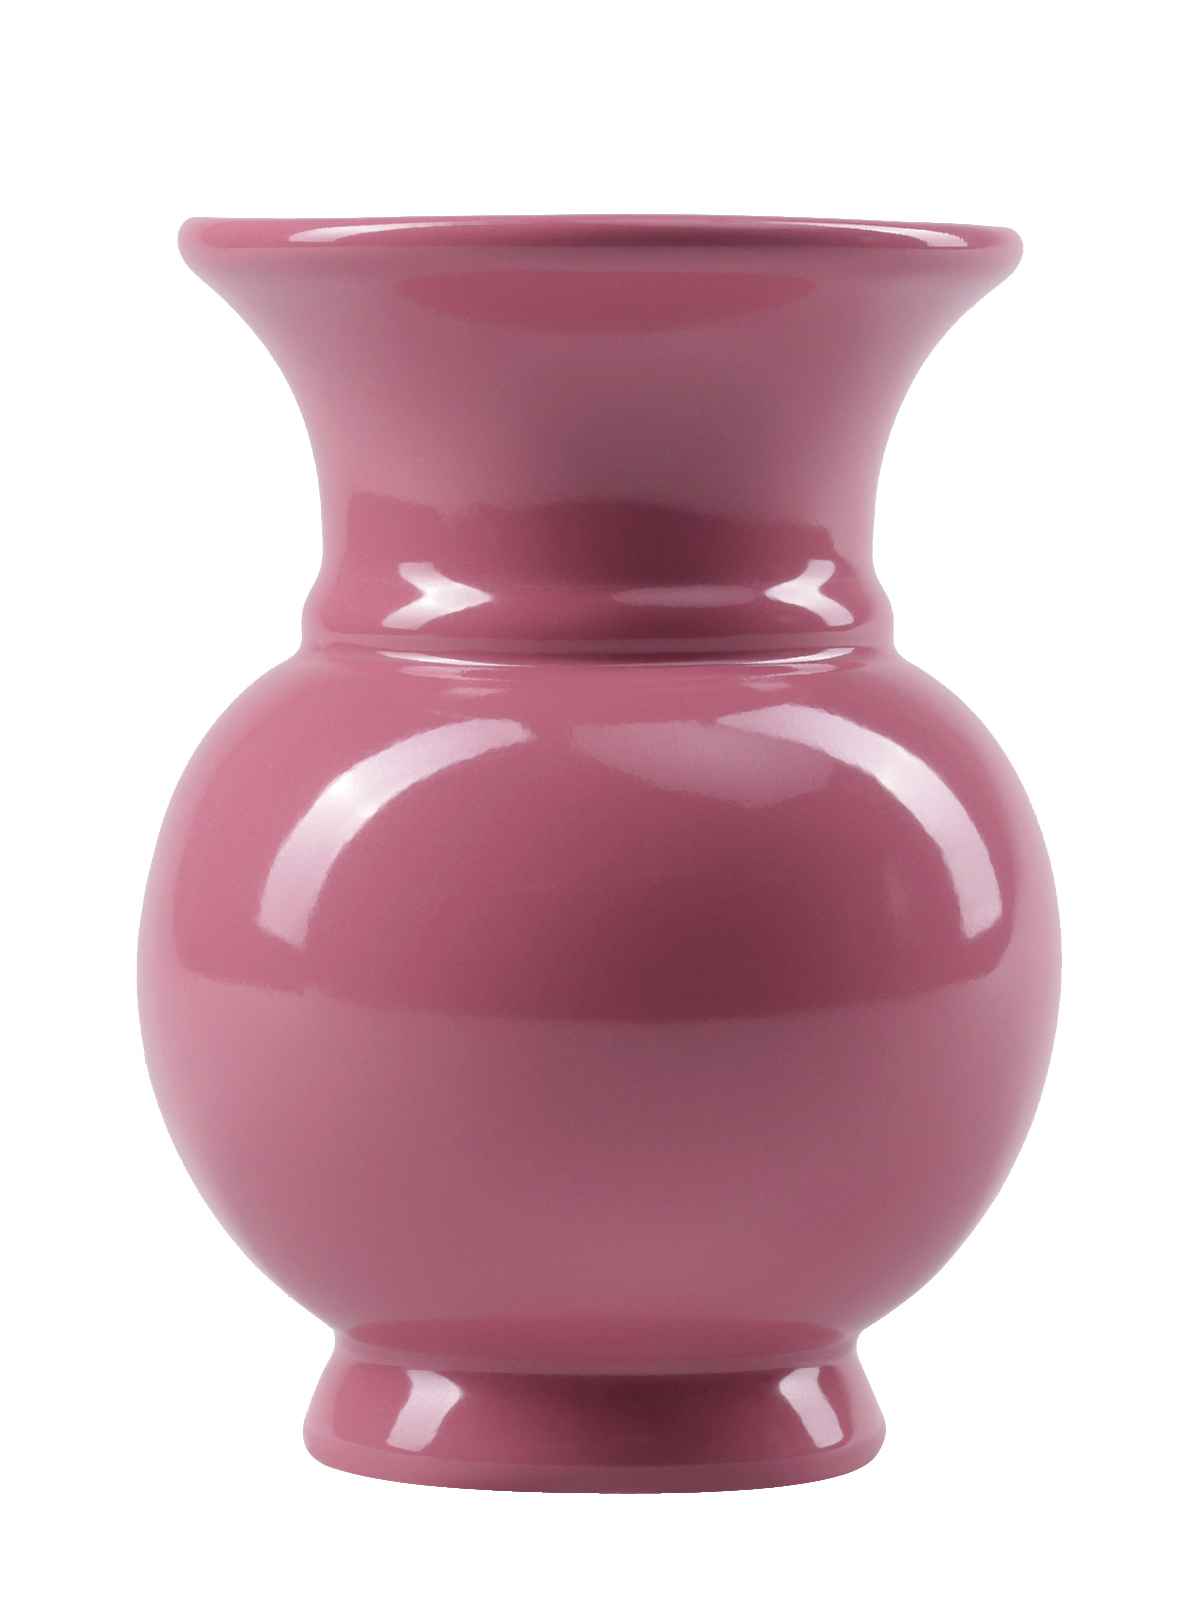 фото Ваза груморо бутон лиловый, декоративная ваза для цветов, керамика для интерьера